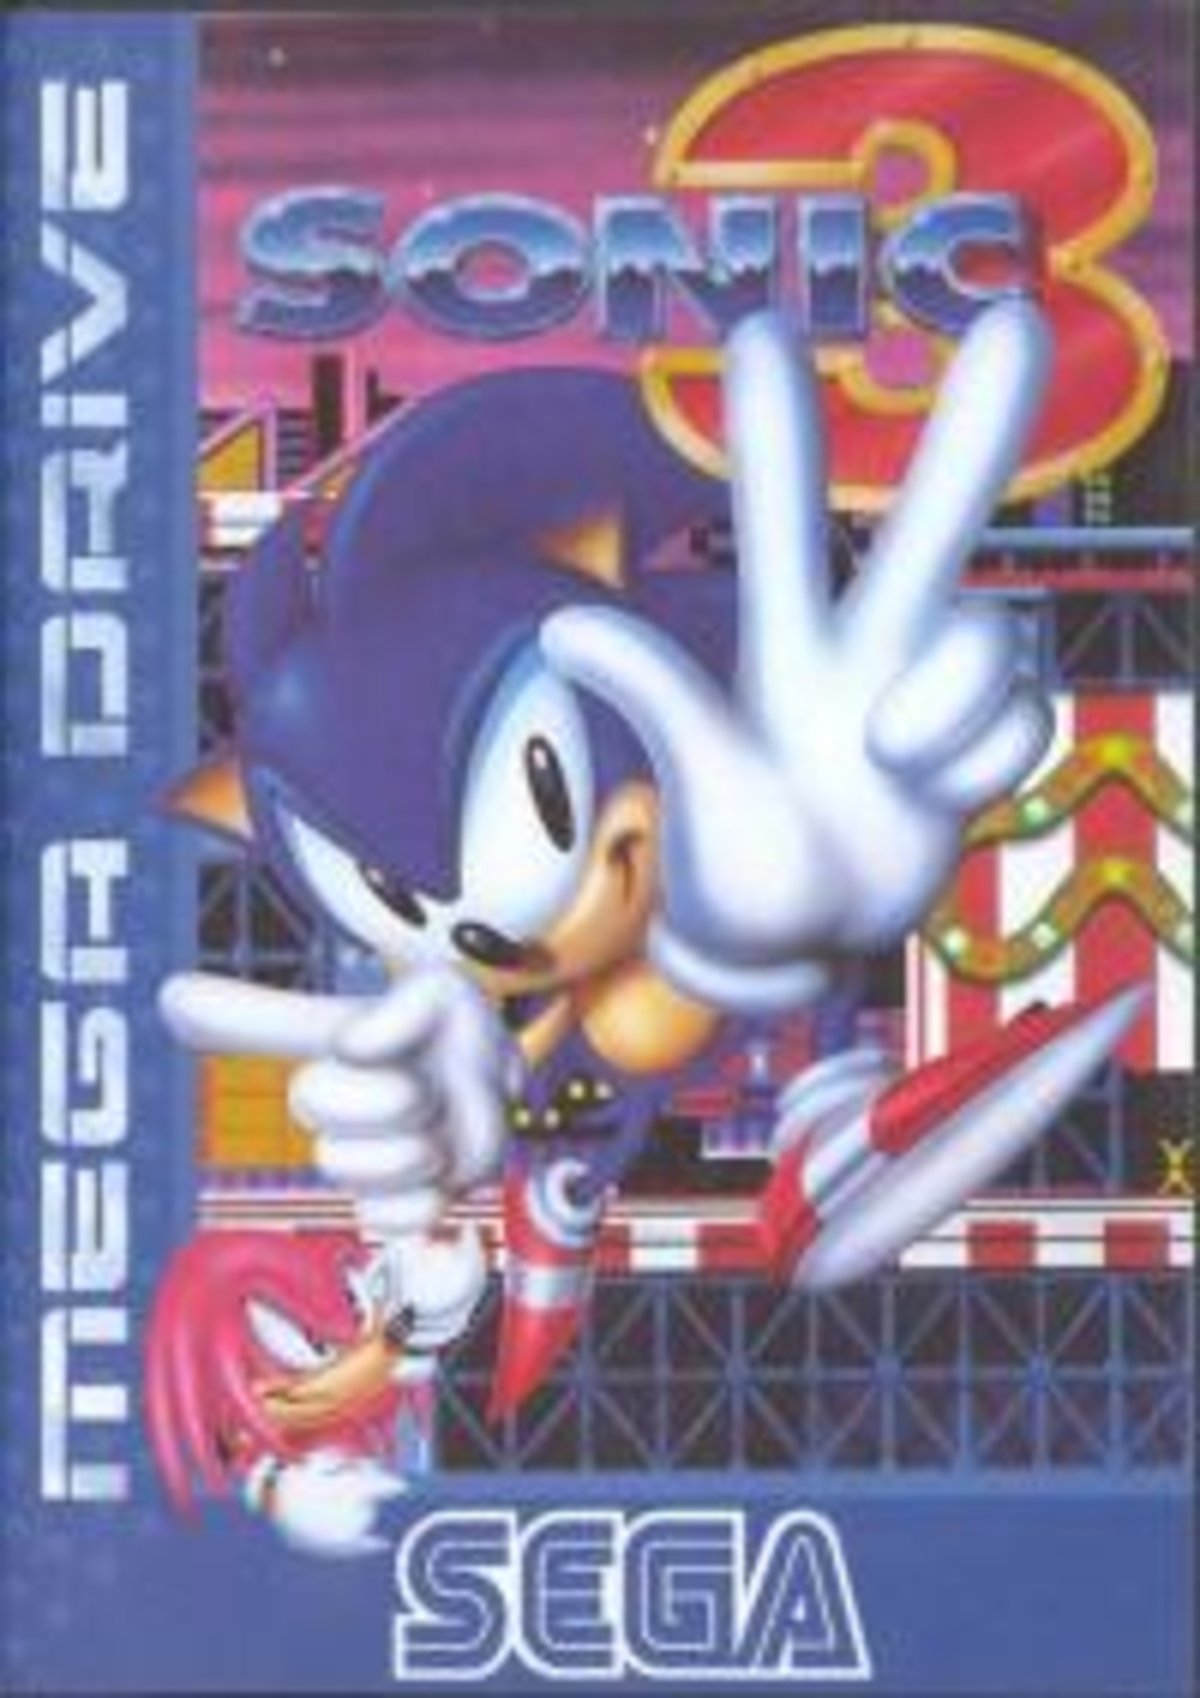 AlfaBetaRETRO: Sonic Chaos - Pequeña gran carrera